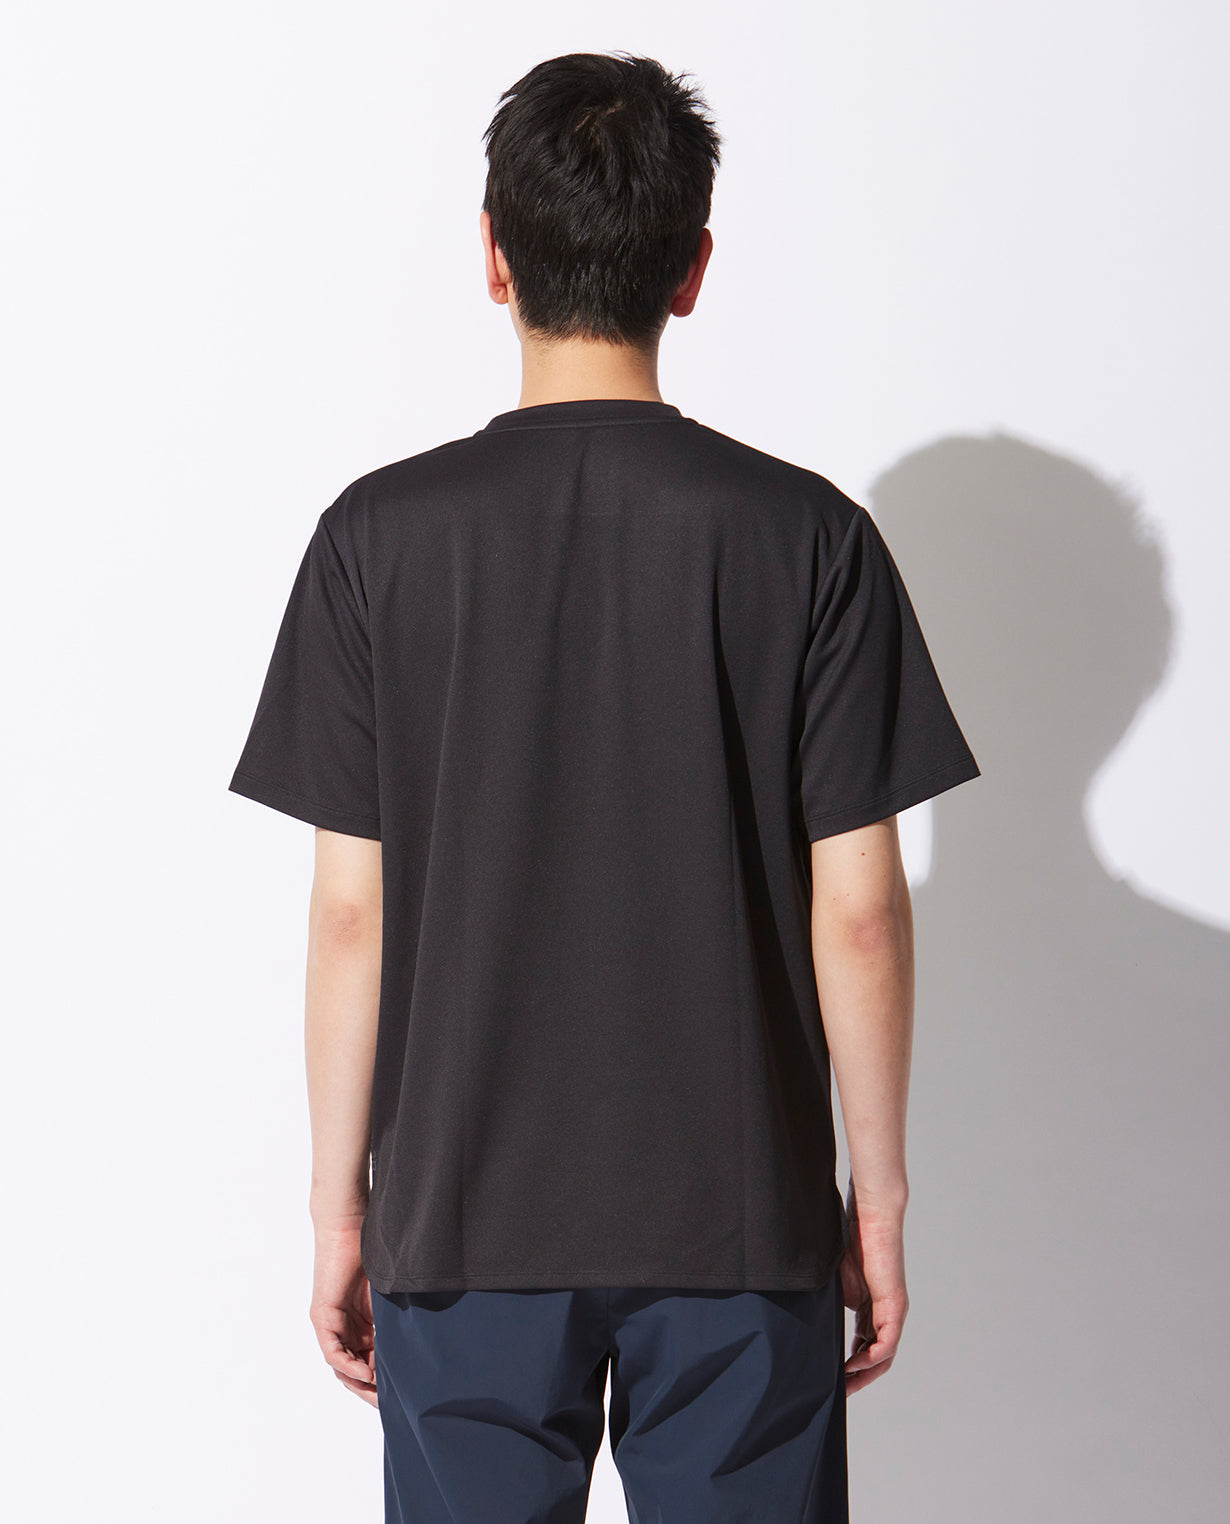 【RESTOCK!】■ブラック 047_K 和紙糸ラウンドヘムTシャツ